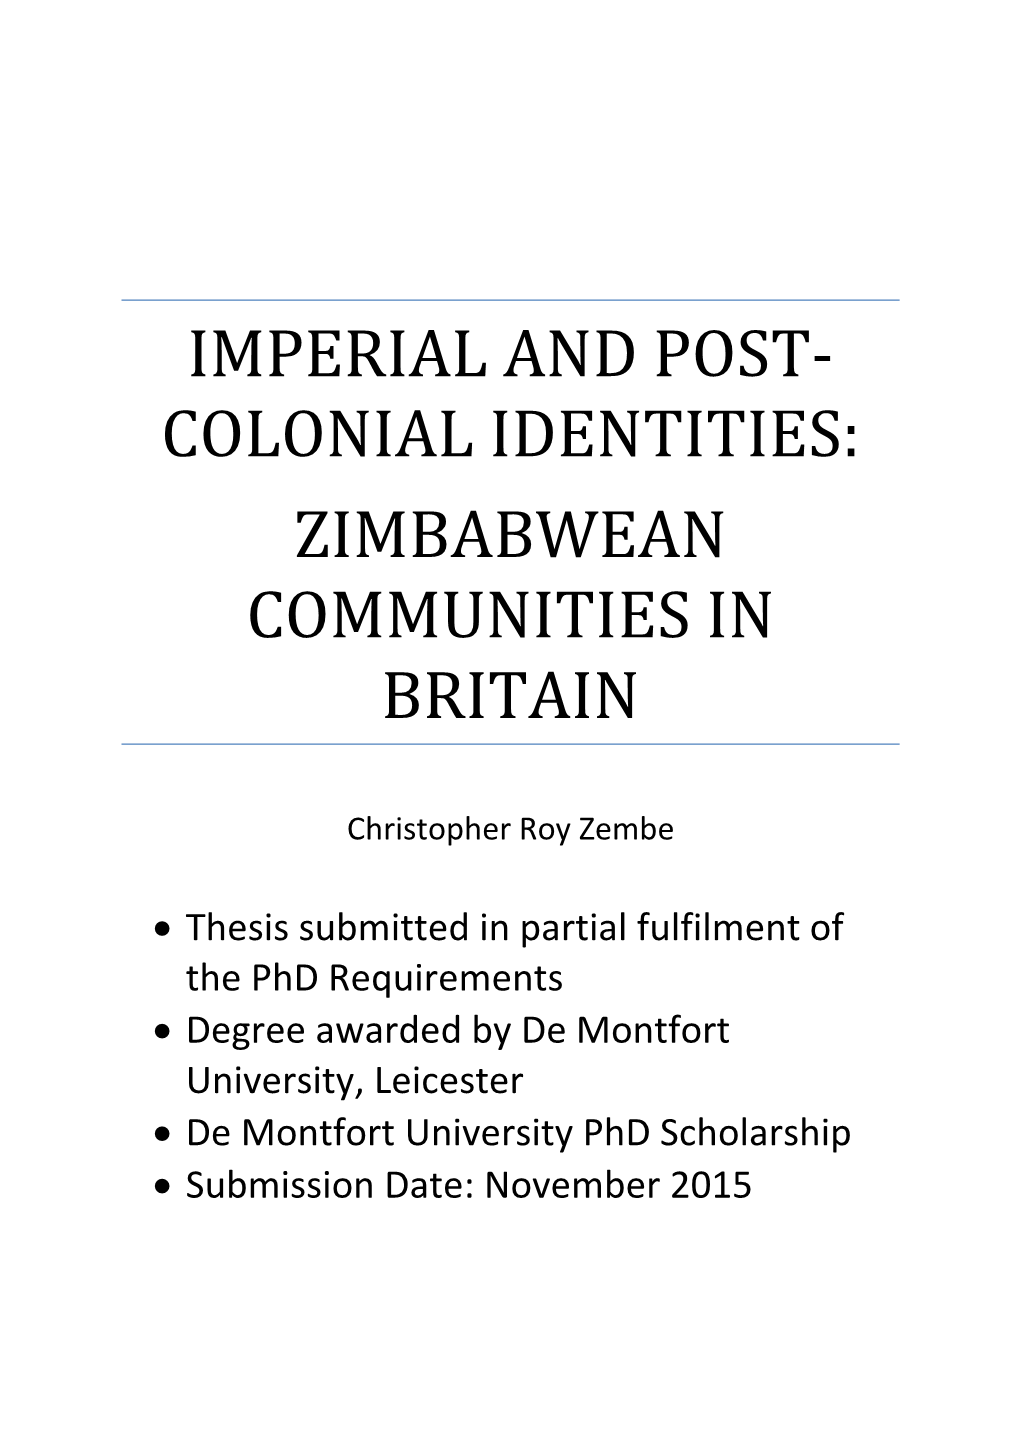 Colonial Identities: Zimbabwean Communities in Britain